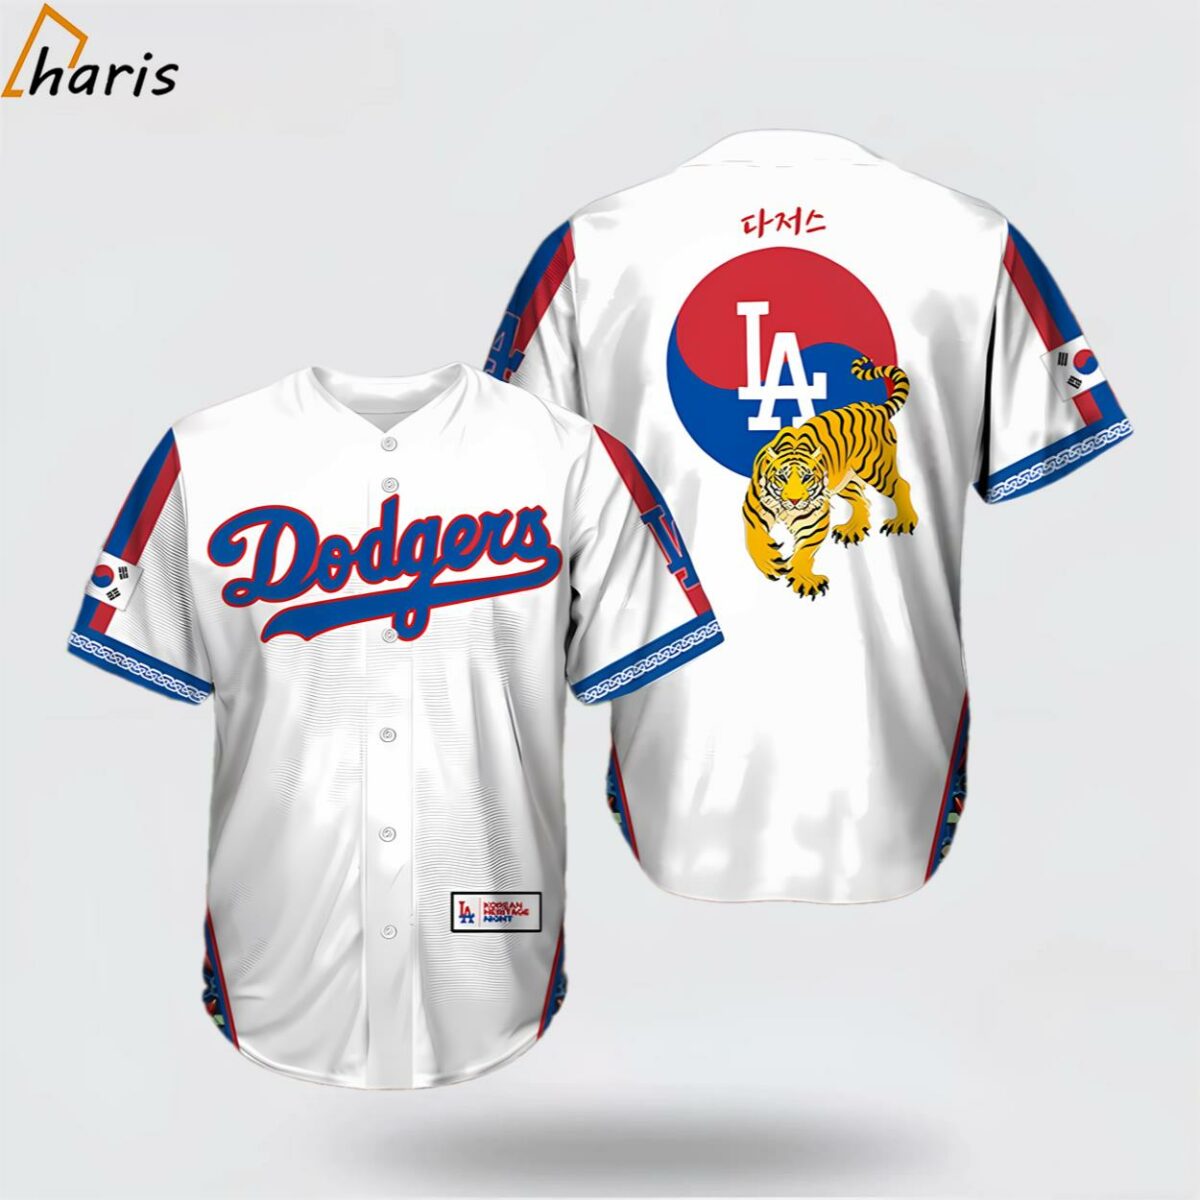 Korean Heritage Night LA Dodger Jersey 1 jersey